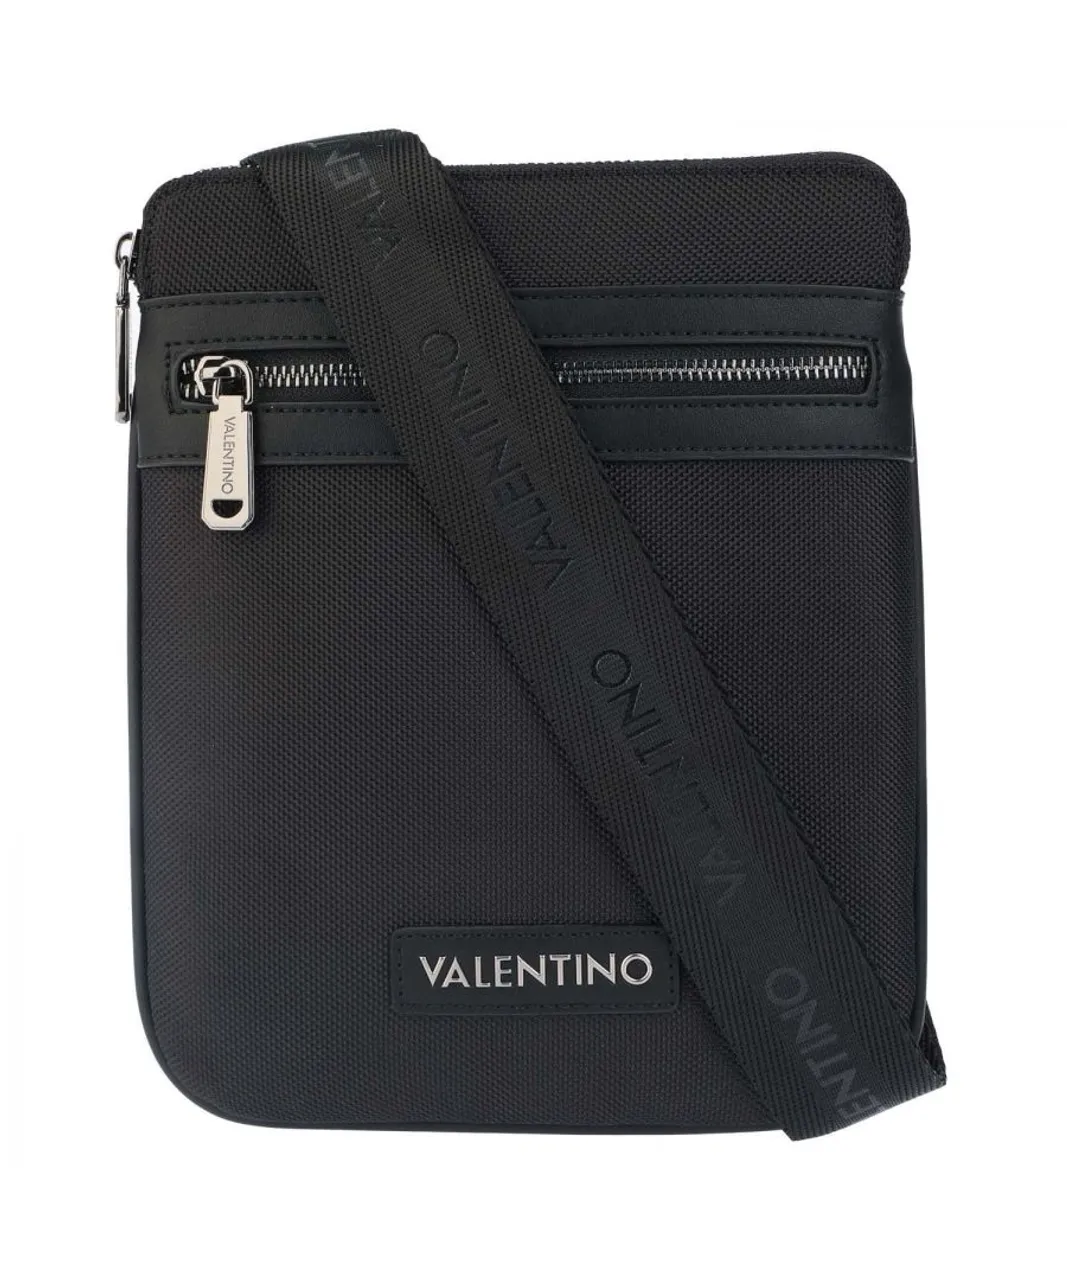 Valentino Mens Accessories Crossbody Bag in Black - One Size